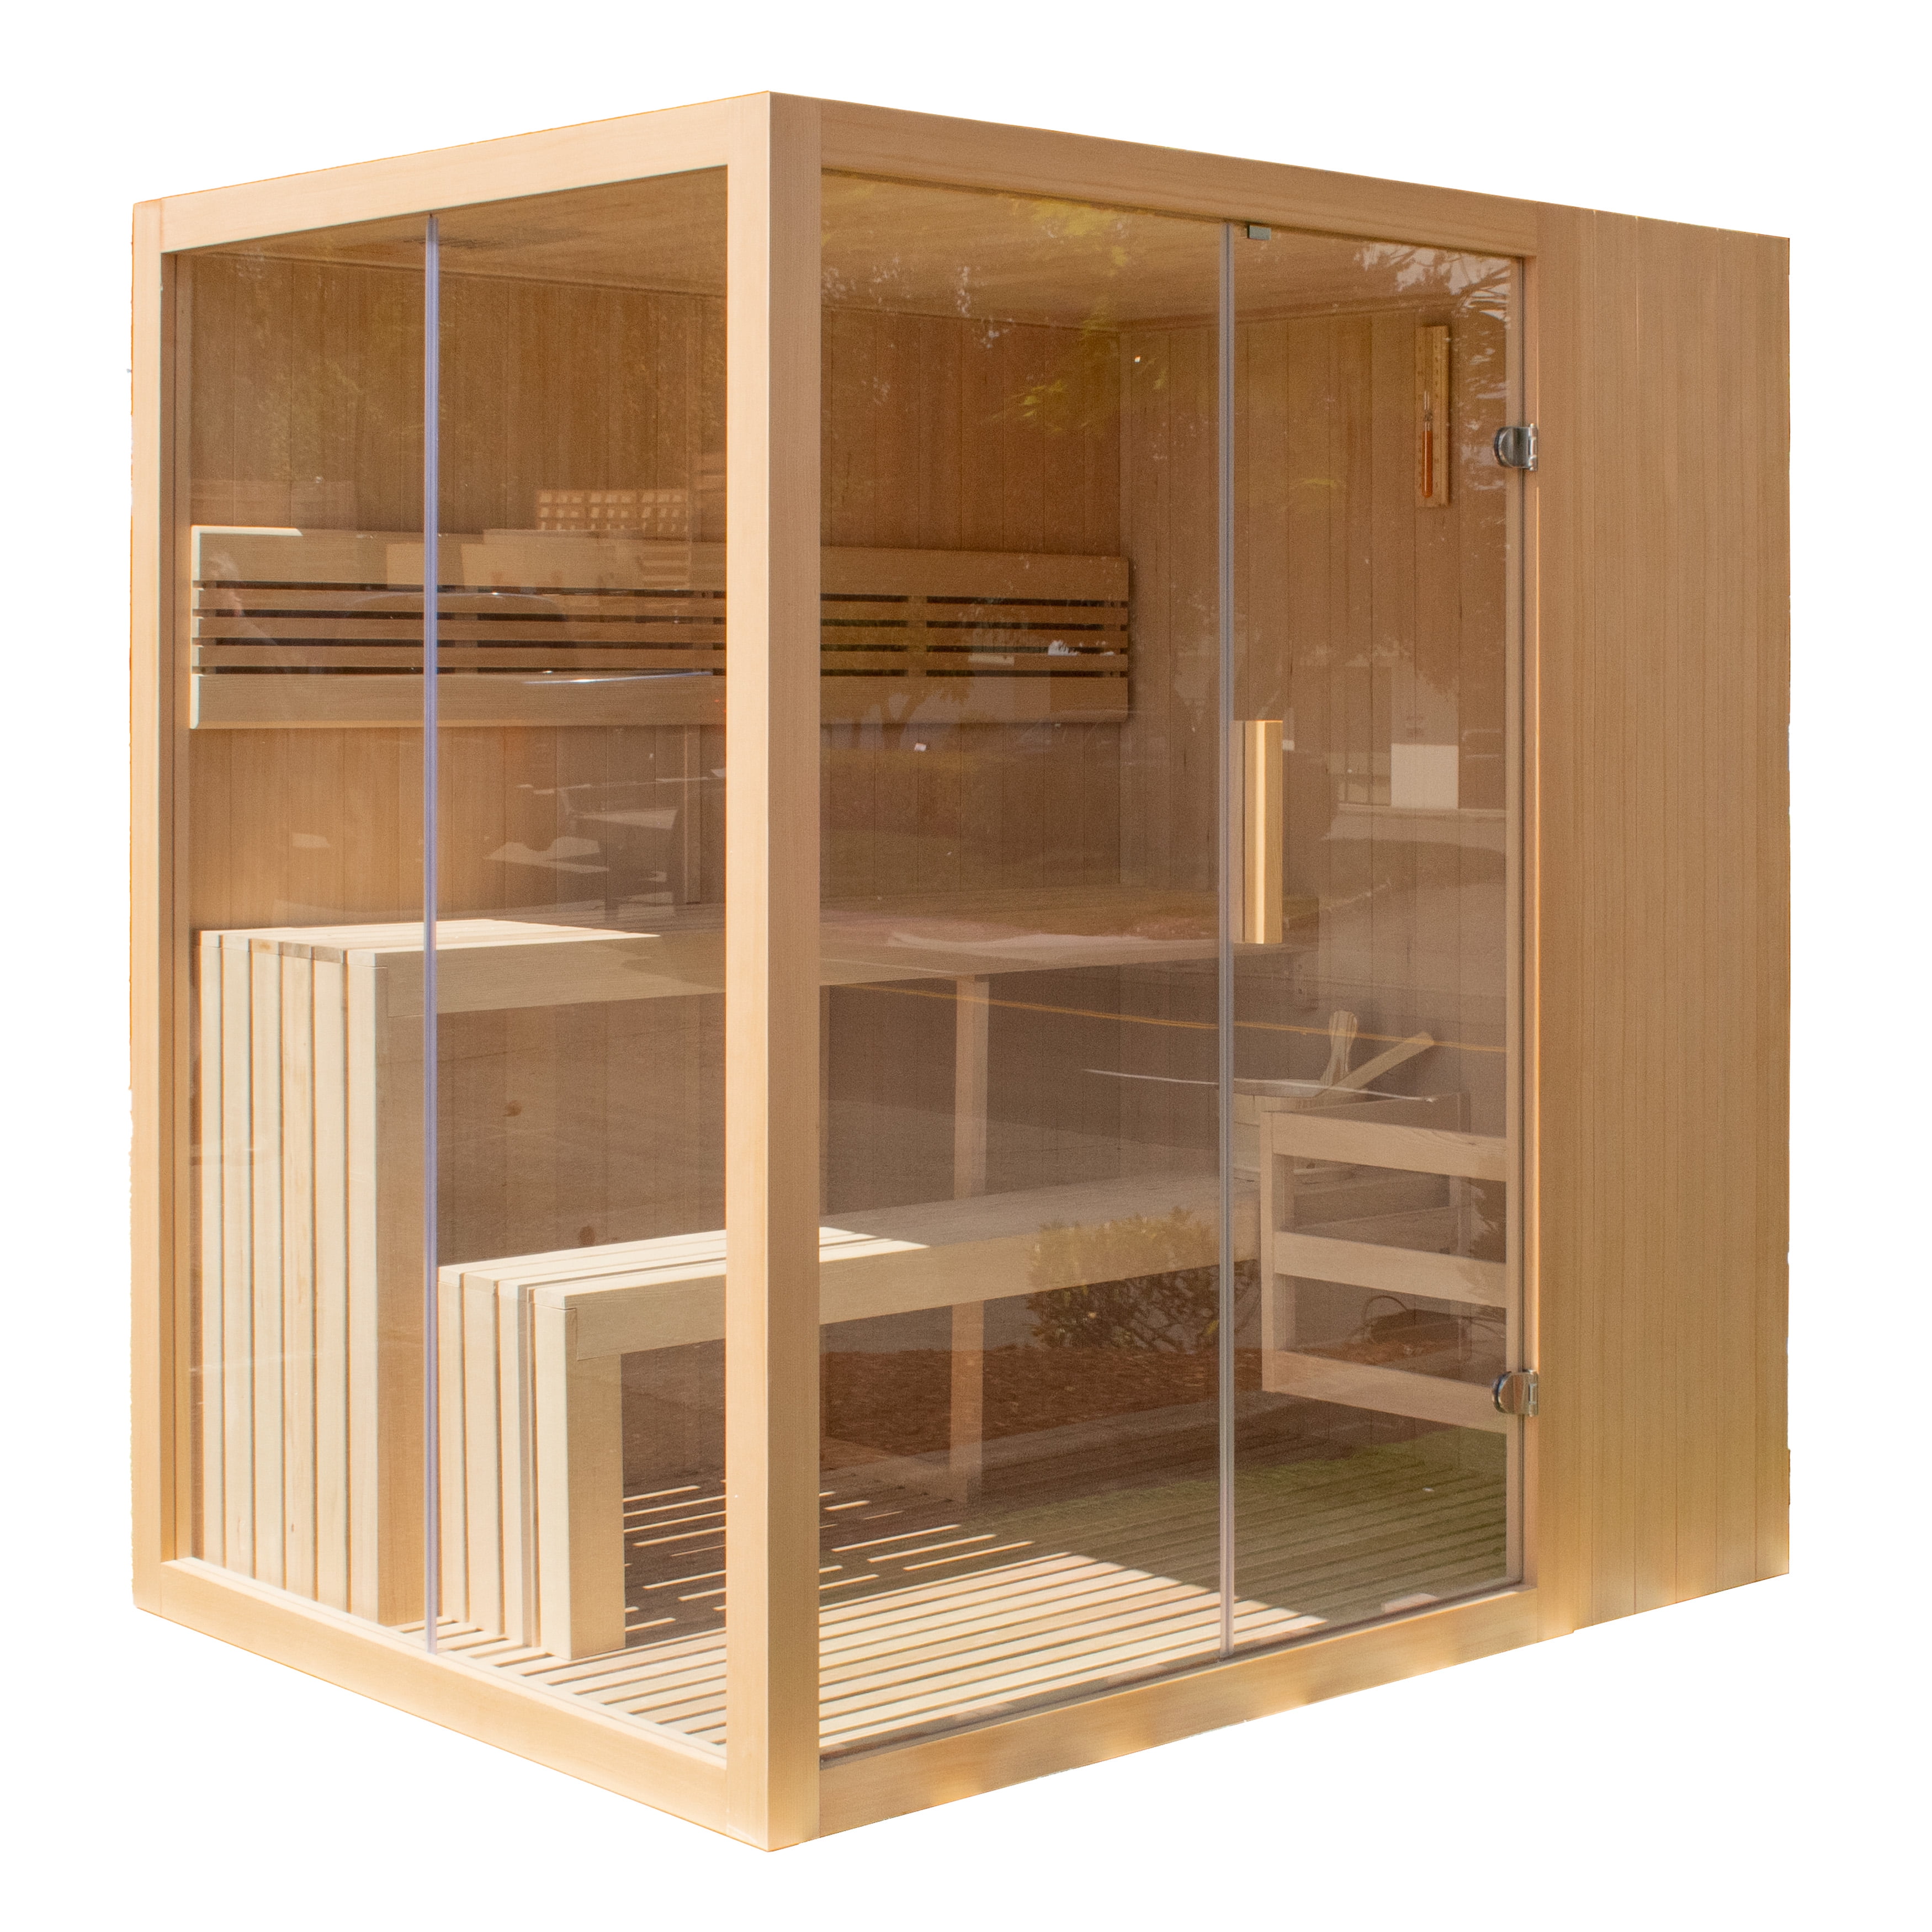 ALEKO STHE4INNY-UNB 4.5 kW ETL Certified Heater Canadian Hemlock Indoor Wet Dry Sauna with LED Lights - 4 Person, Natural Wood Finish